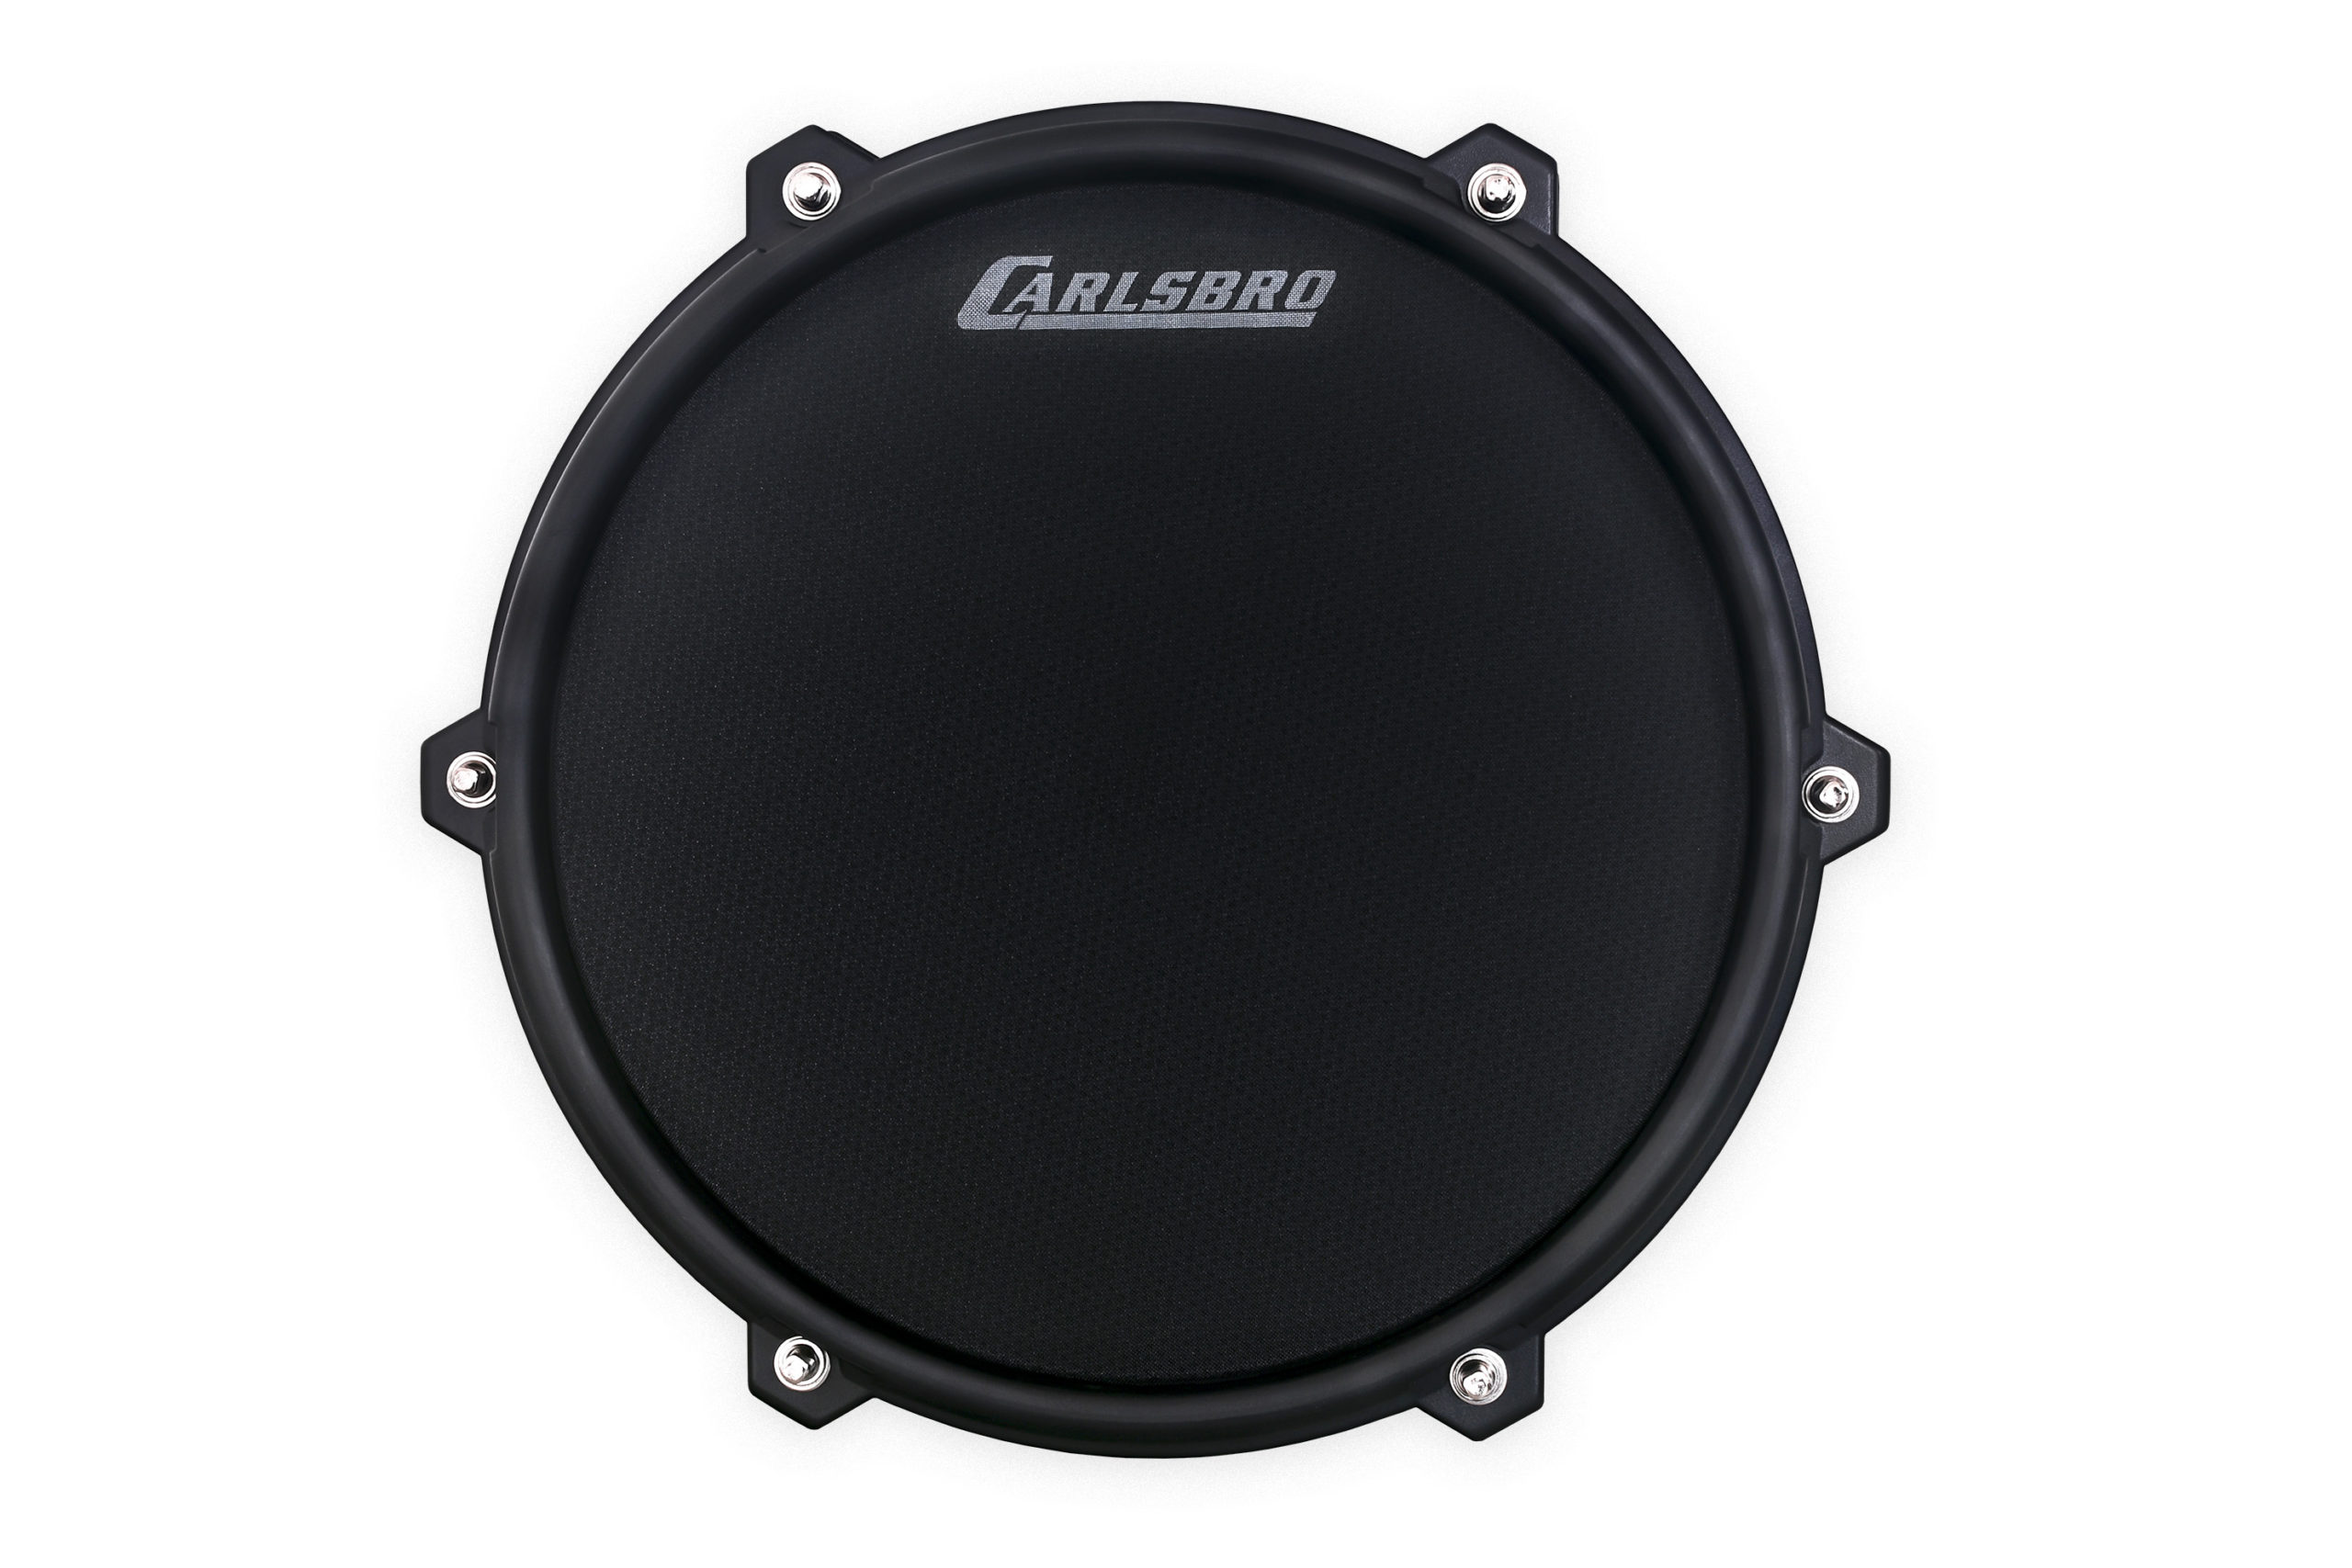 Carlsbro-CSD35M-electronic-drum-kit-snare-pad